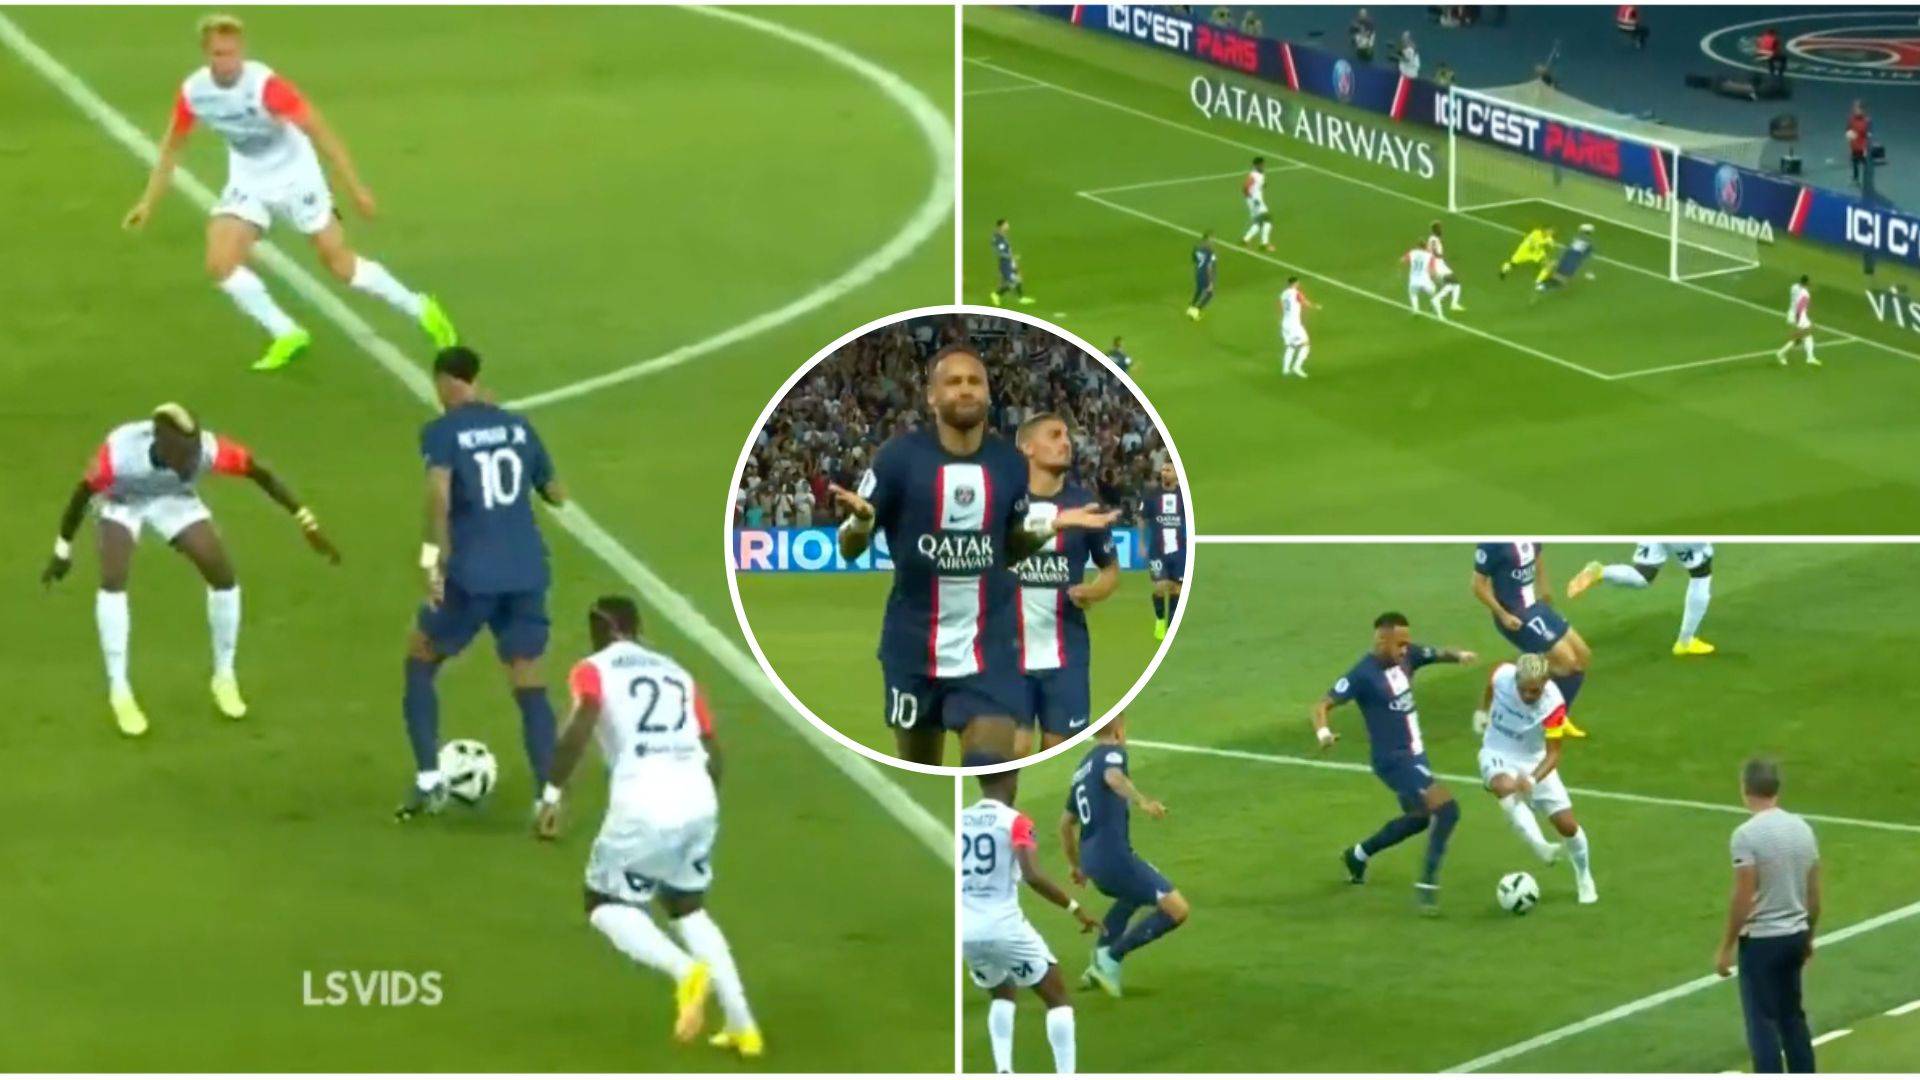 Neymar highlights vs Montpellier